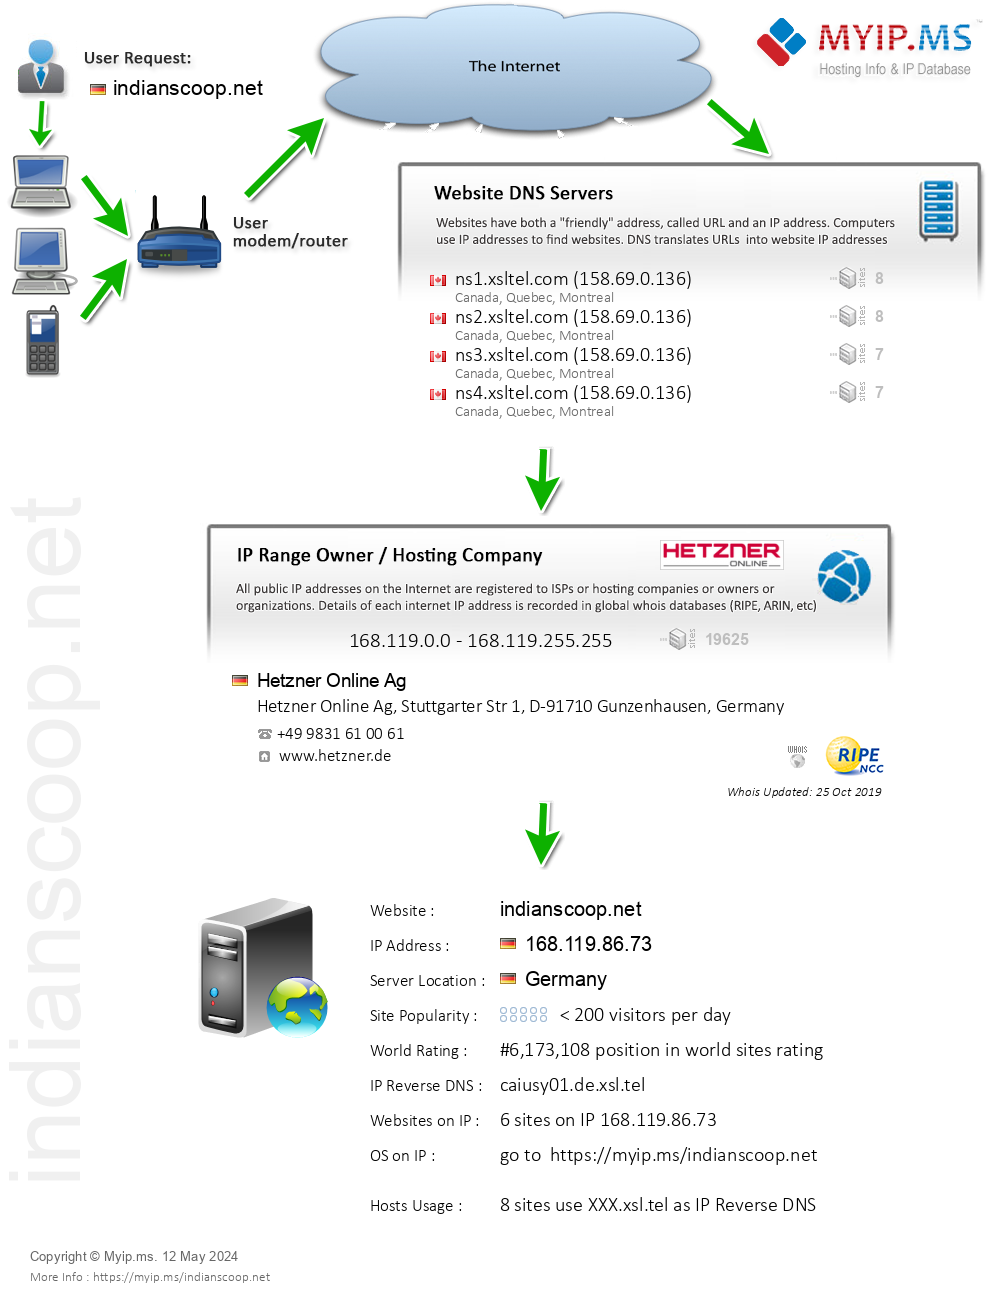 Indianscoop.net - Website Hosting Visual IP Diagram